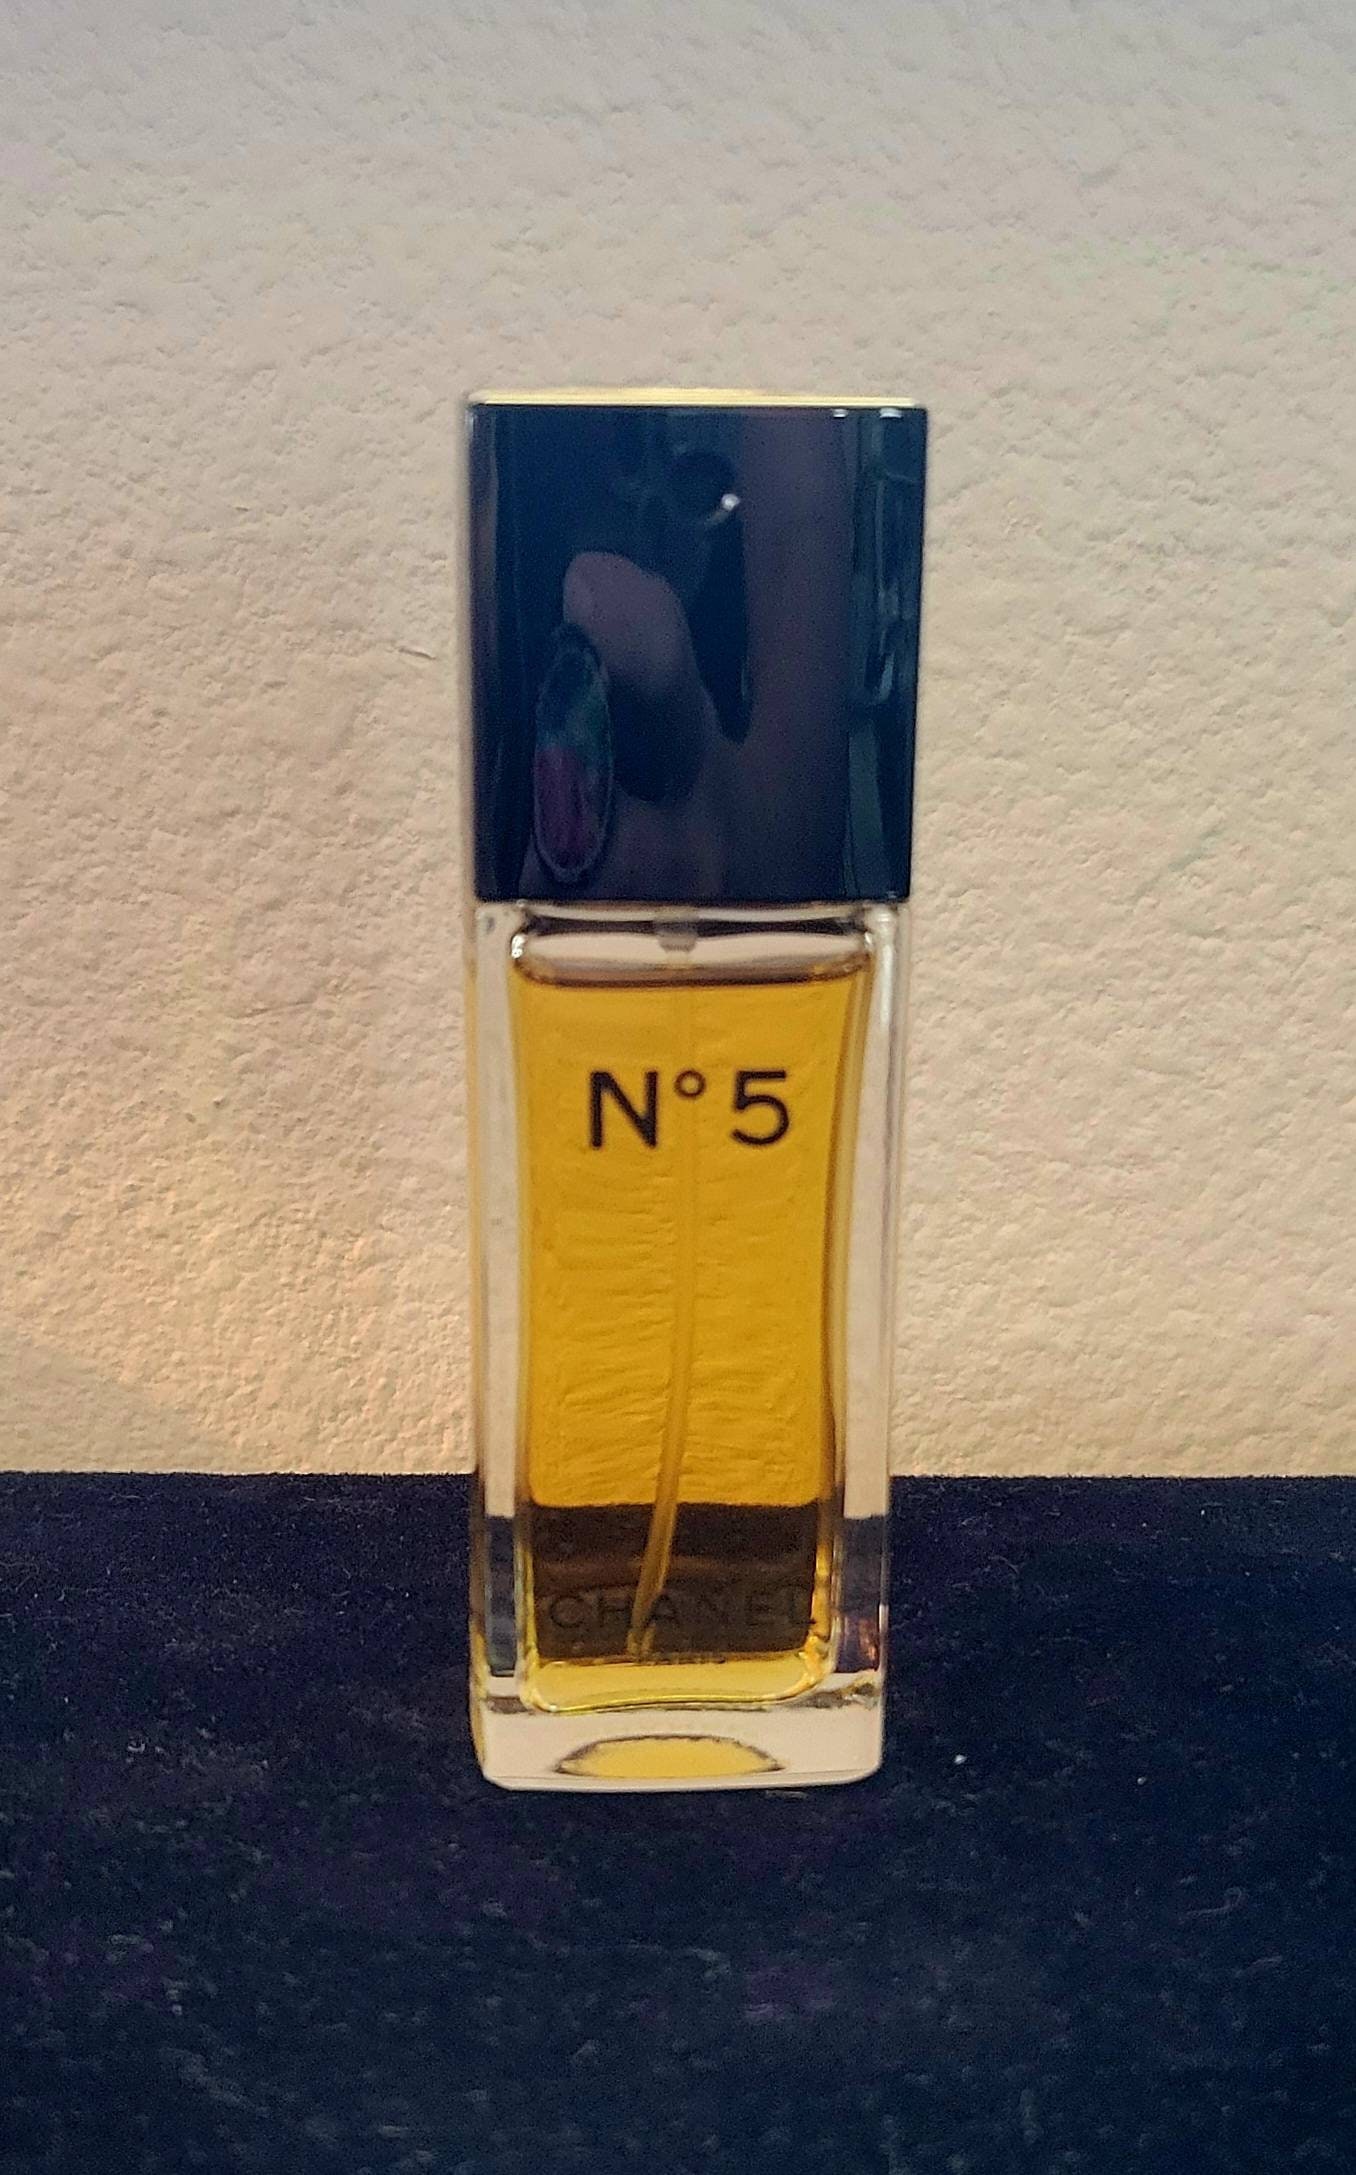 Chanel No 5 Bottle 